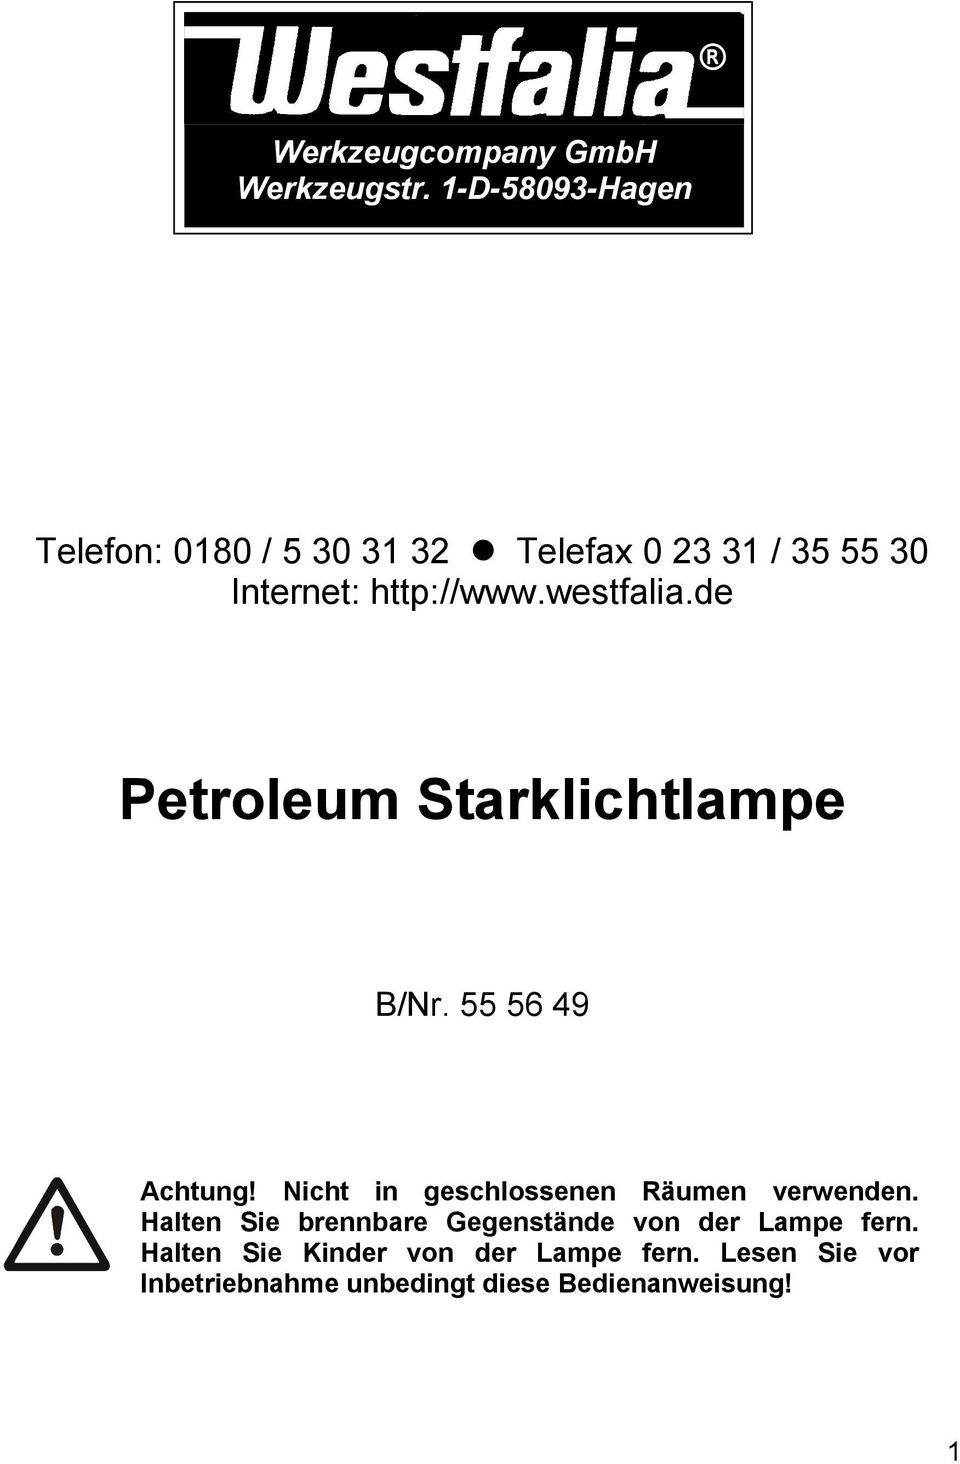 westfalia.de Petroleum Starklichtlampe B/Nr. 55 56 49 Achtung!